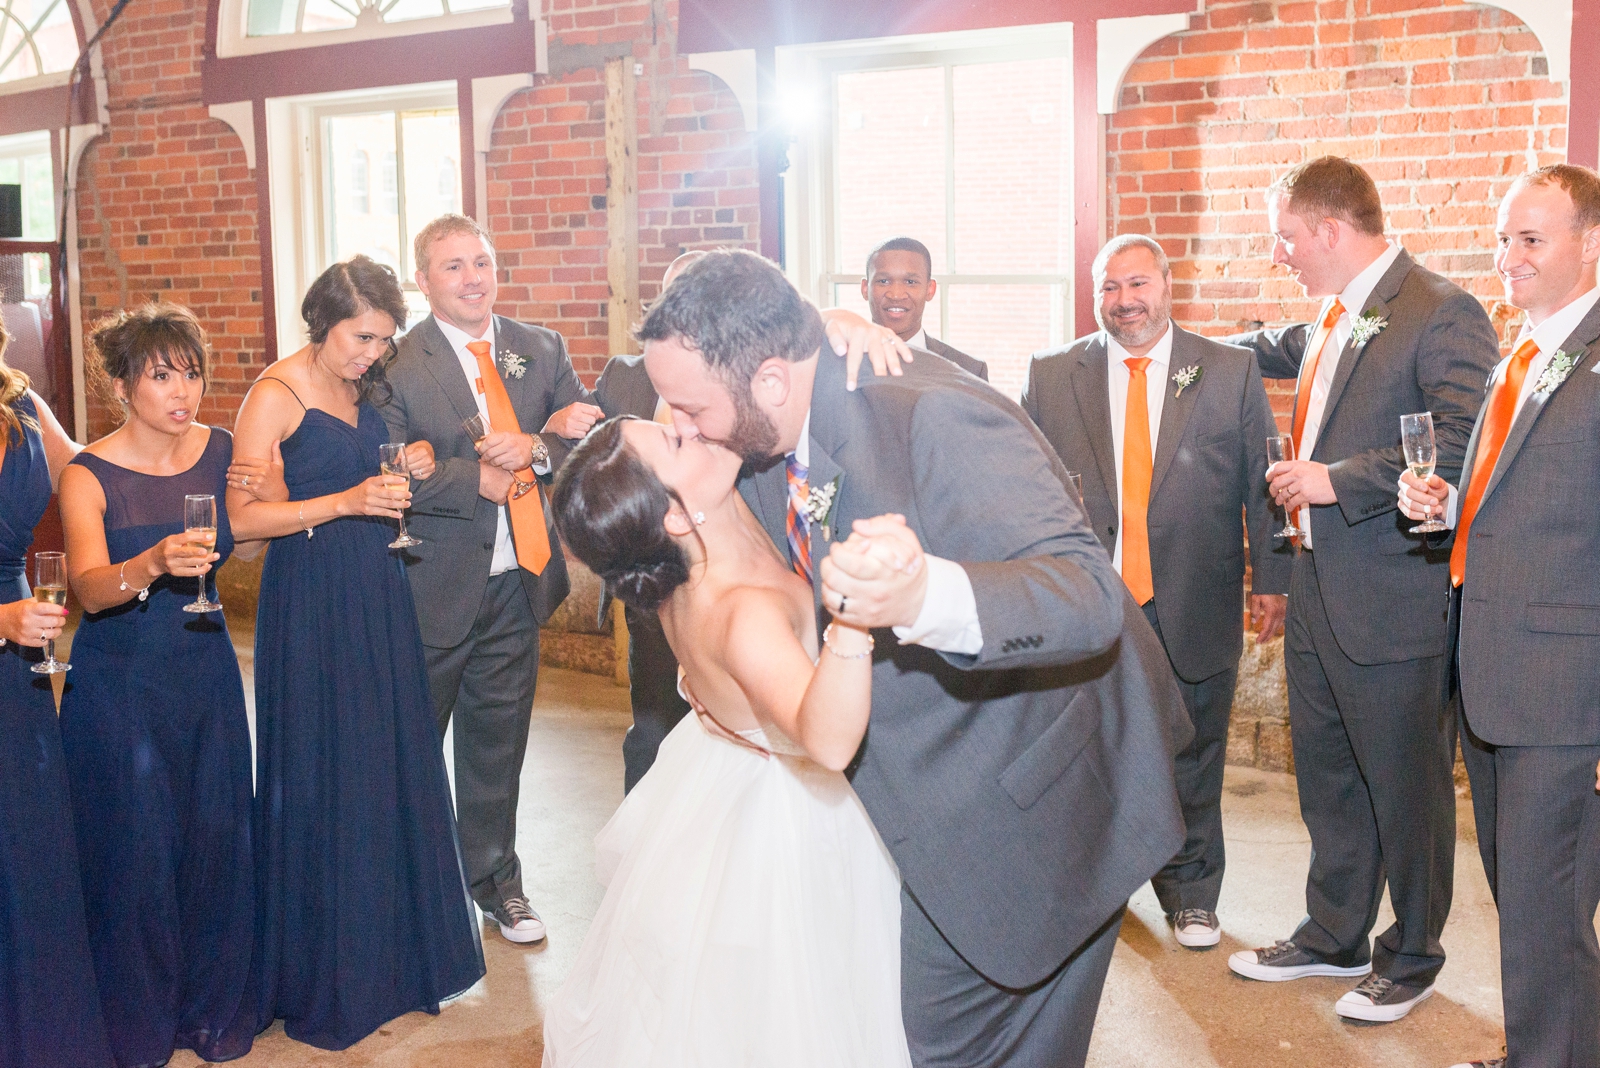 spontaneous-dip-and-kiss-at-a-wedding